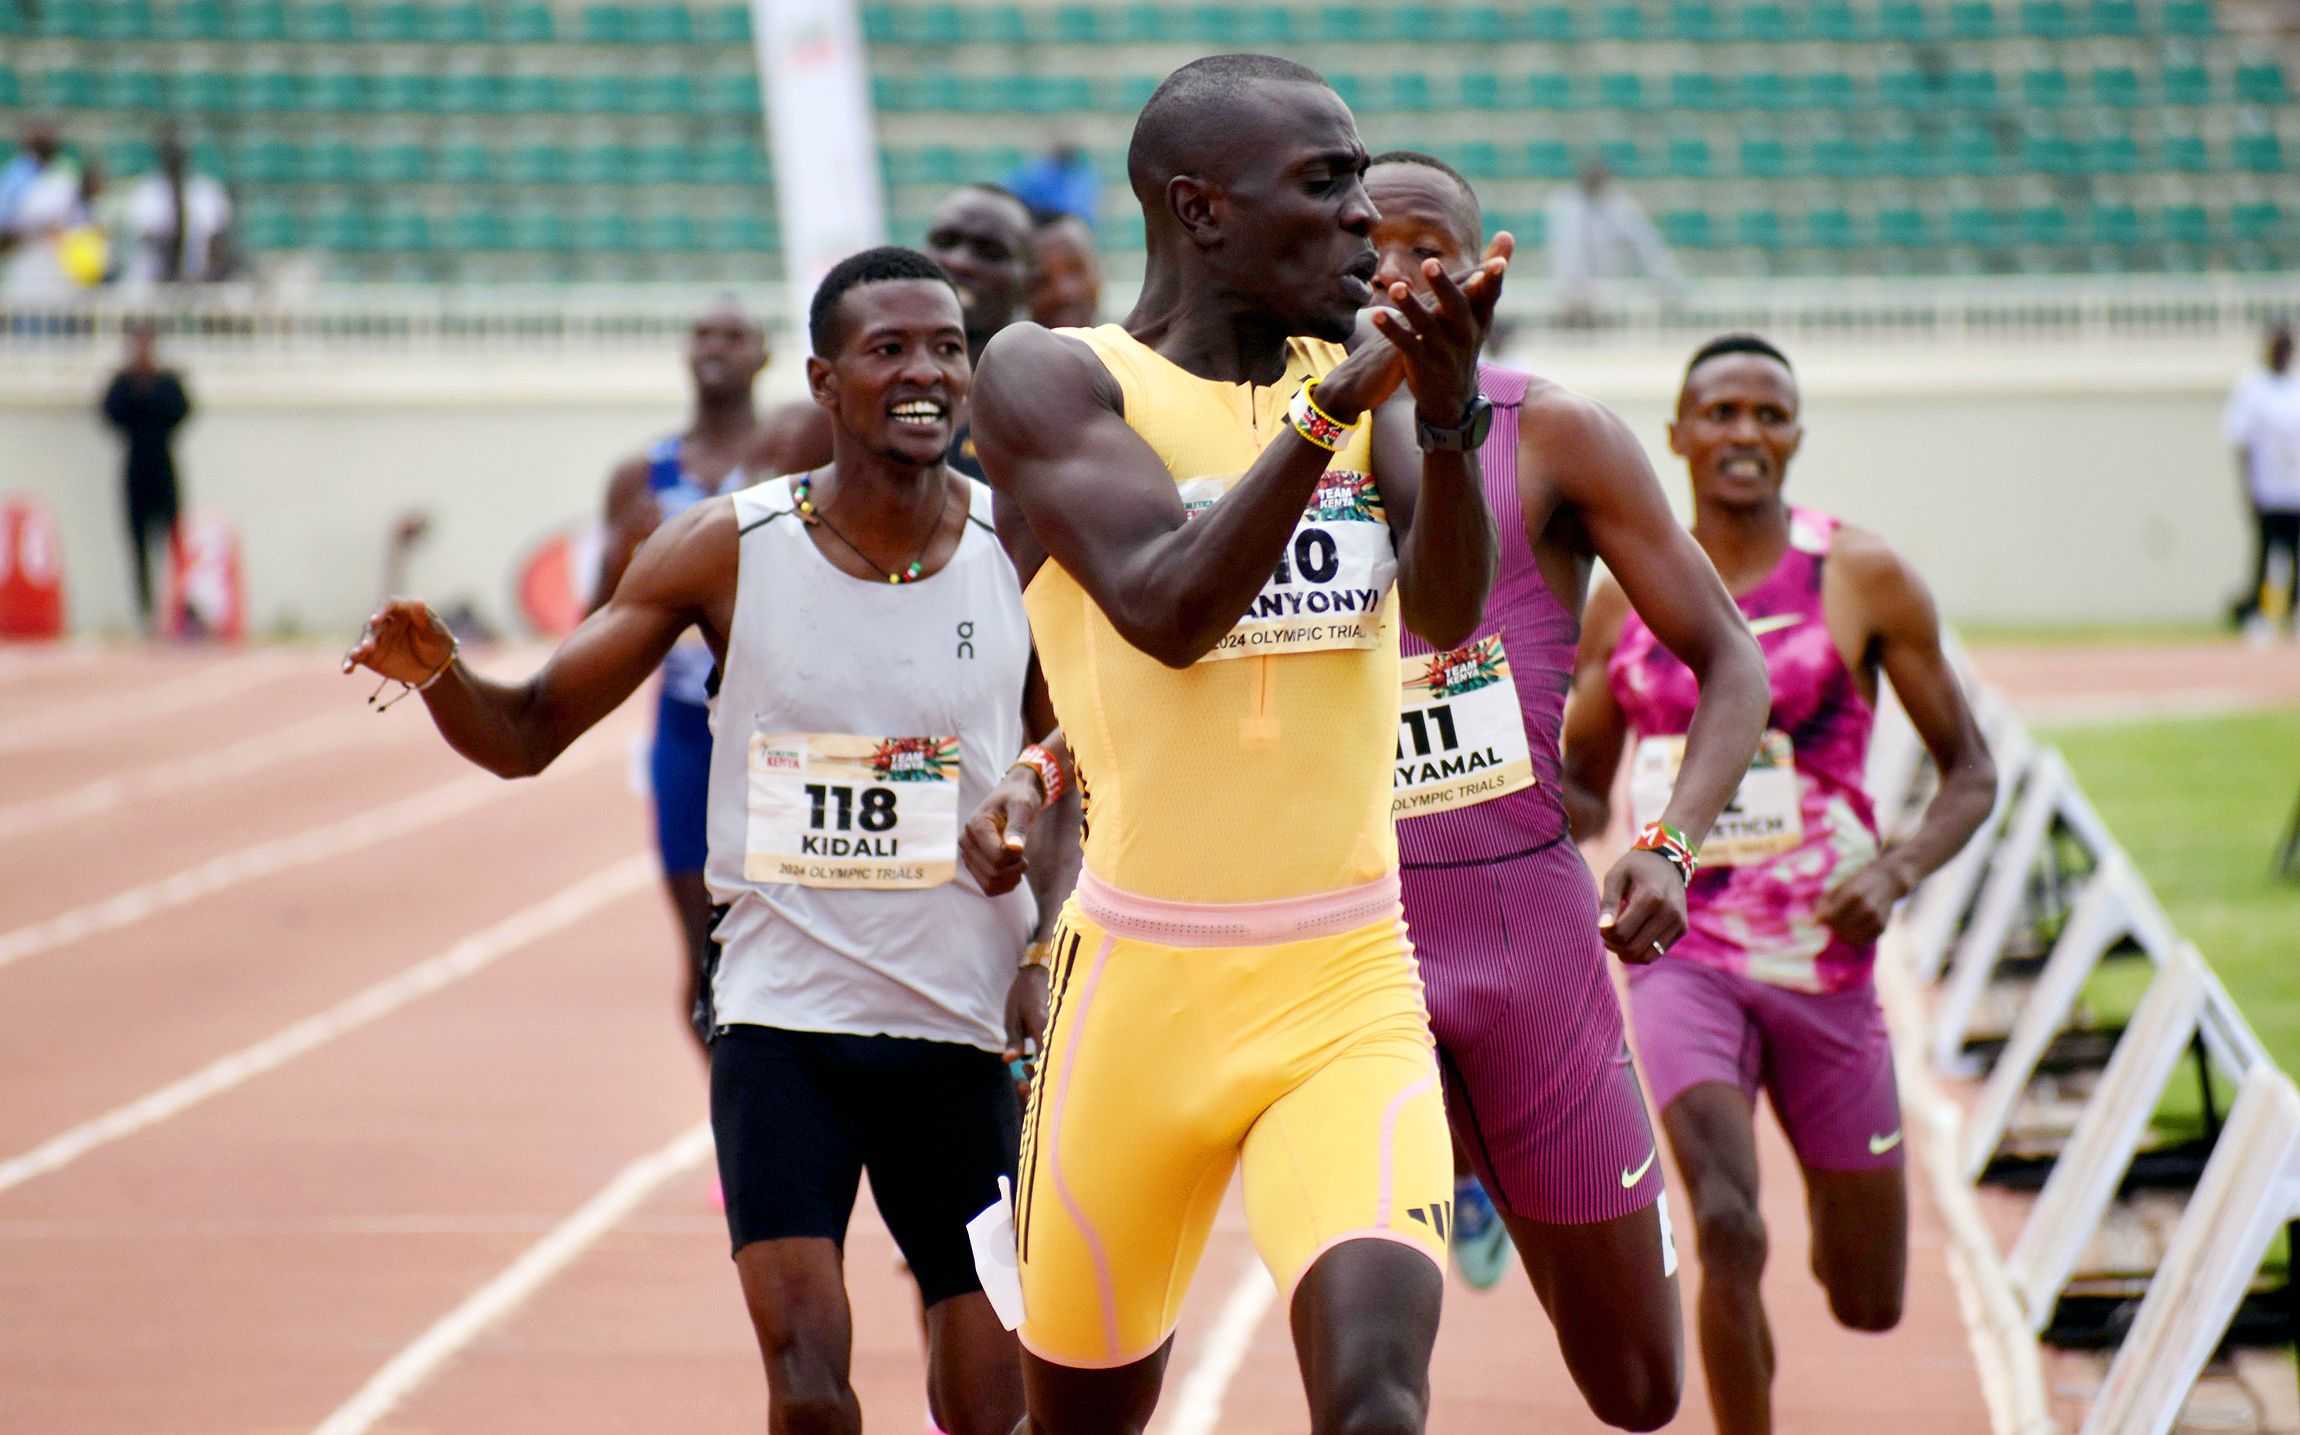 Emmanuel Wanyonyi wins the 800m at Kenya's Olympic Trials